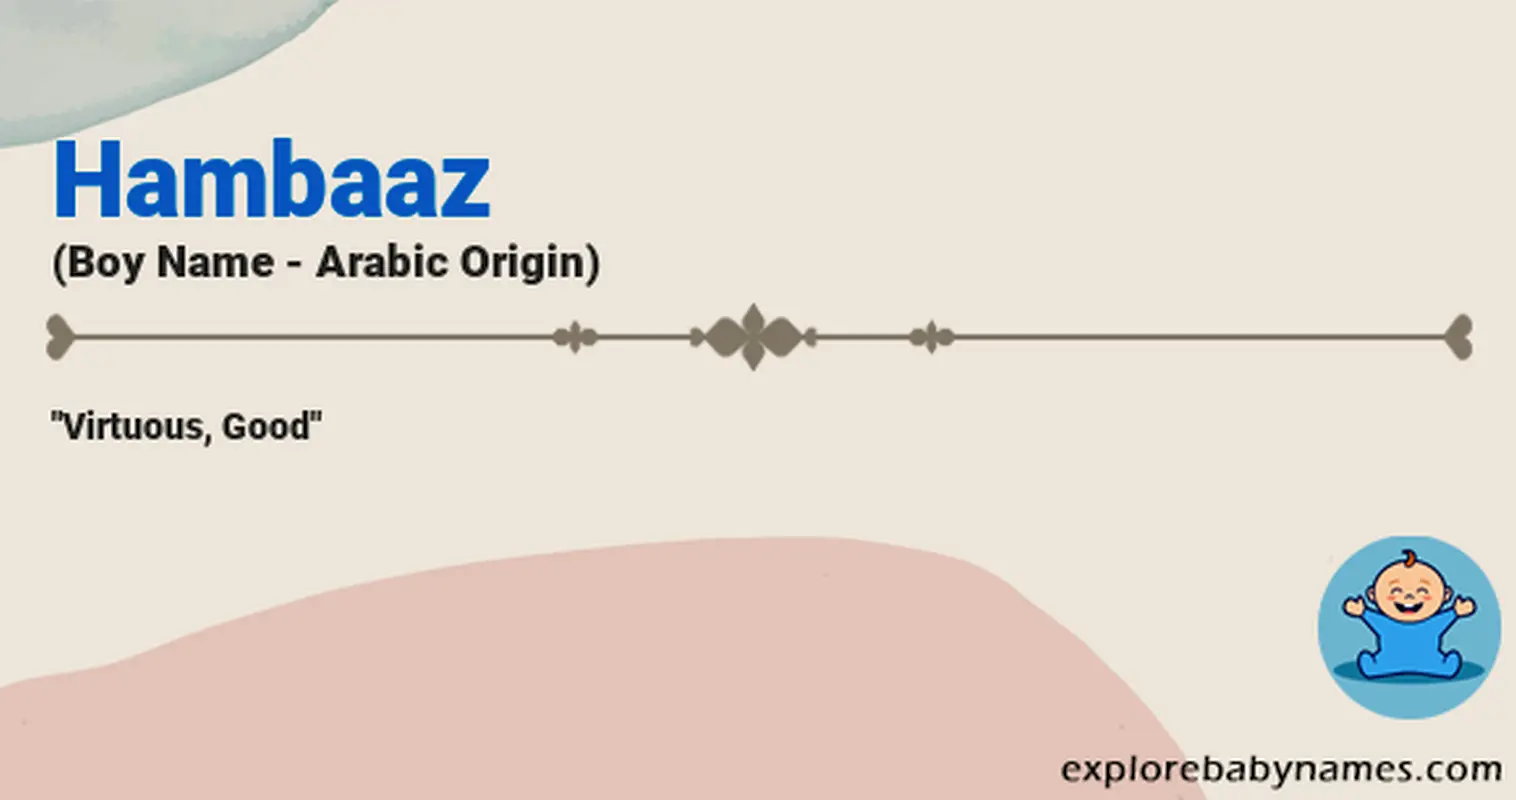 Meaning of Hambaaz